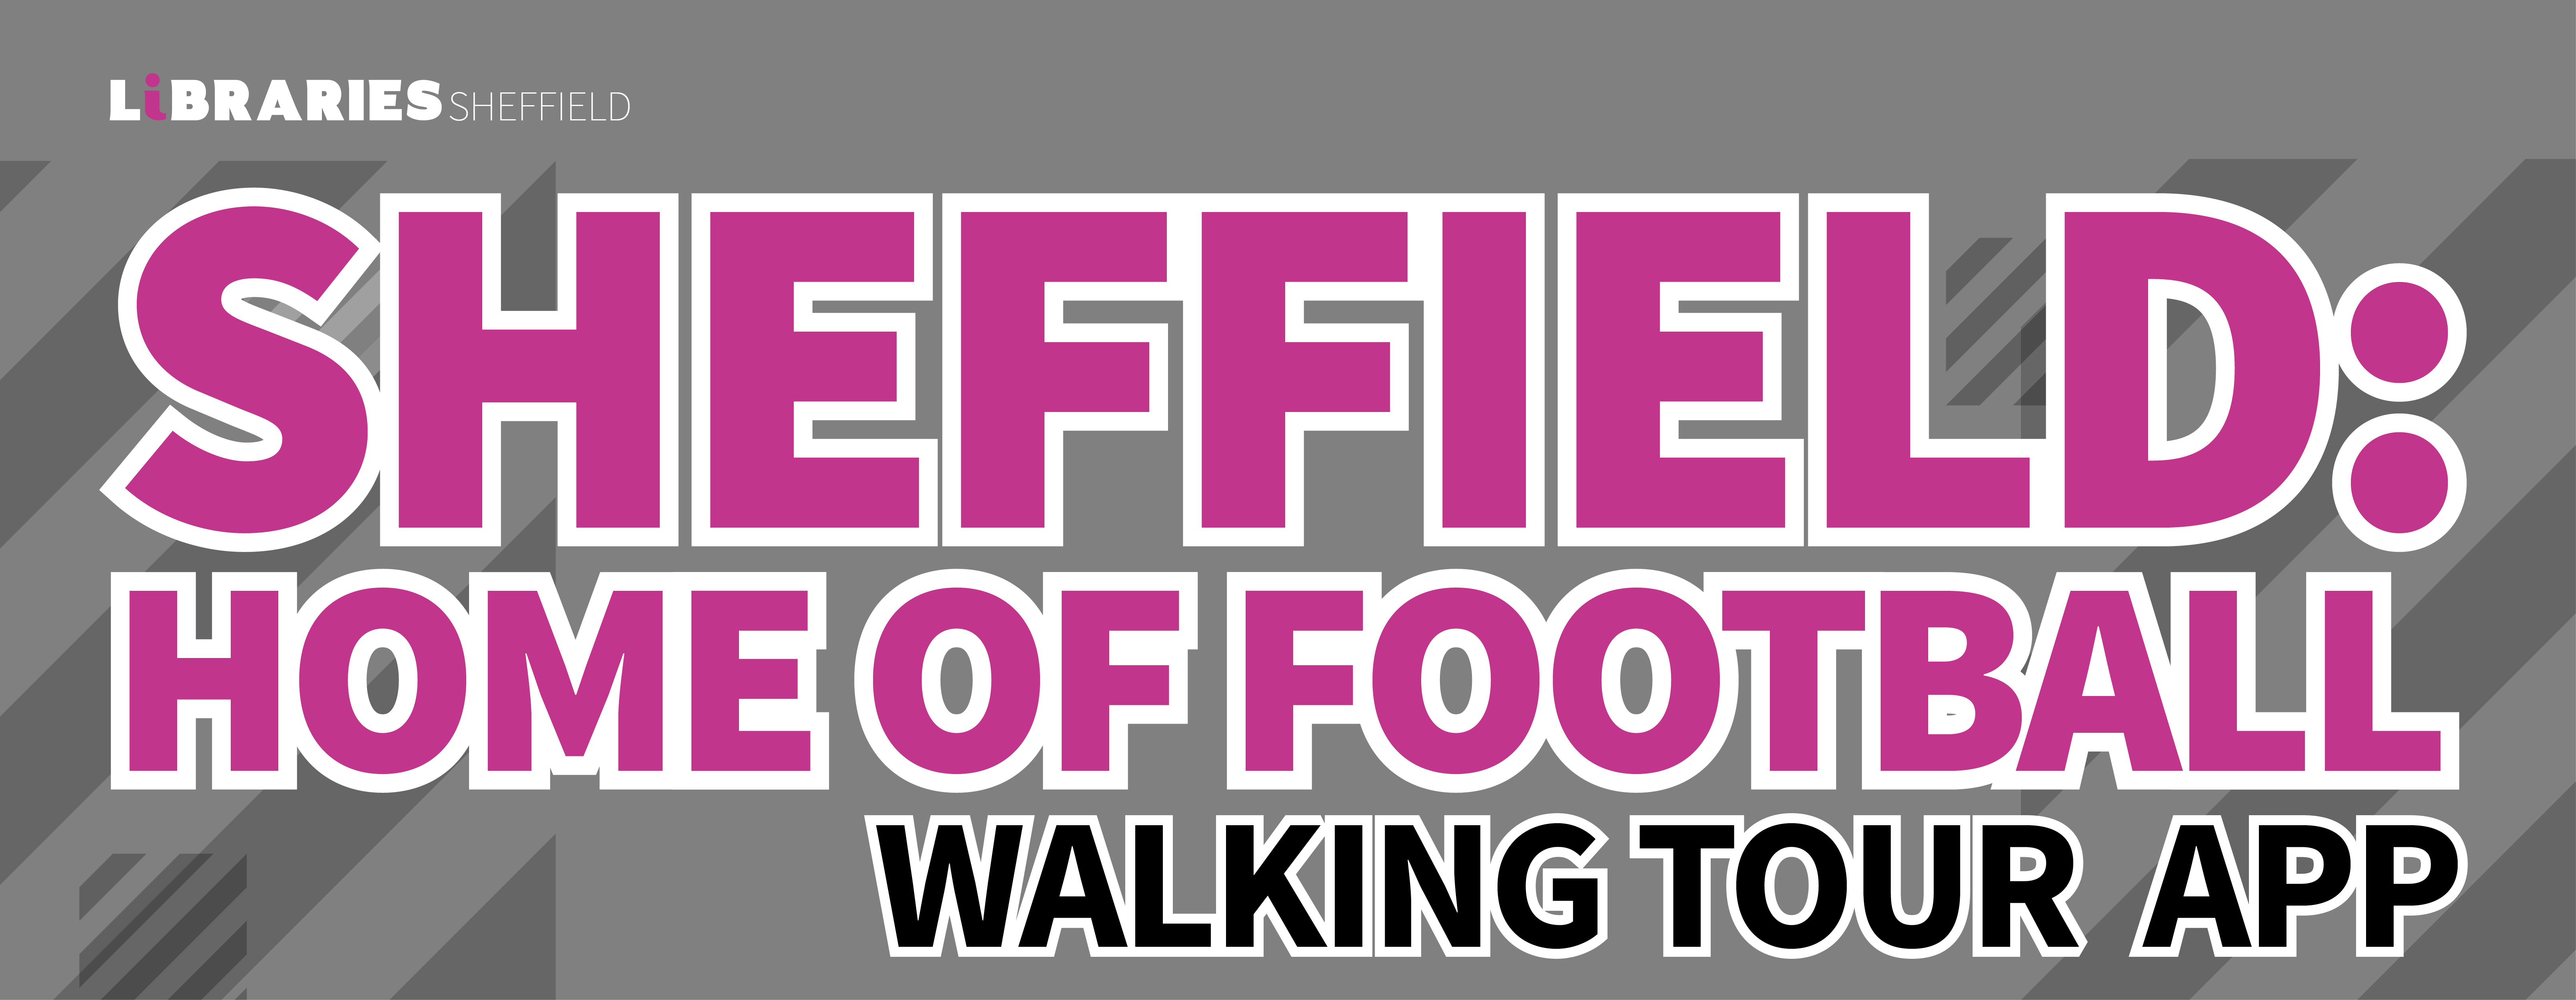 Sheffield: Home of football walking tour app